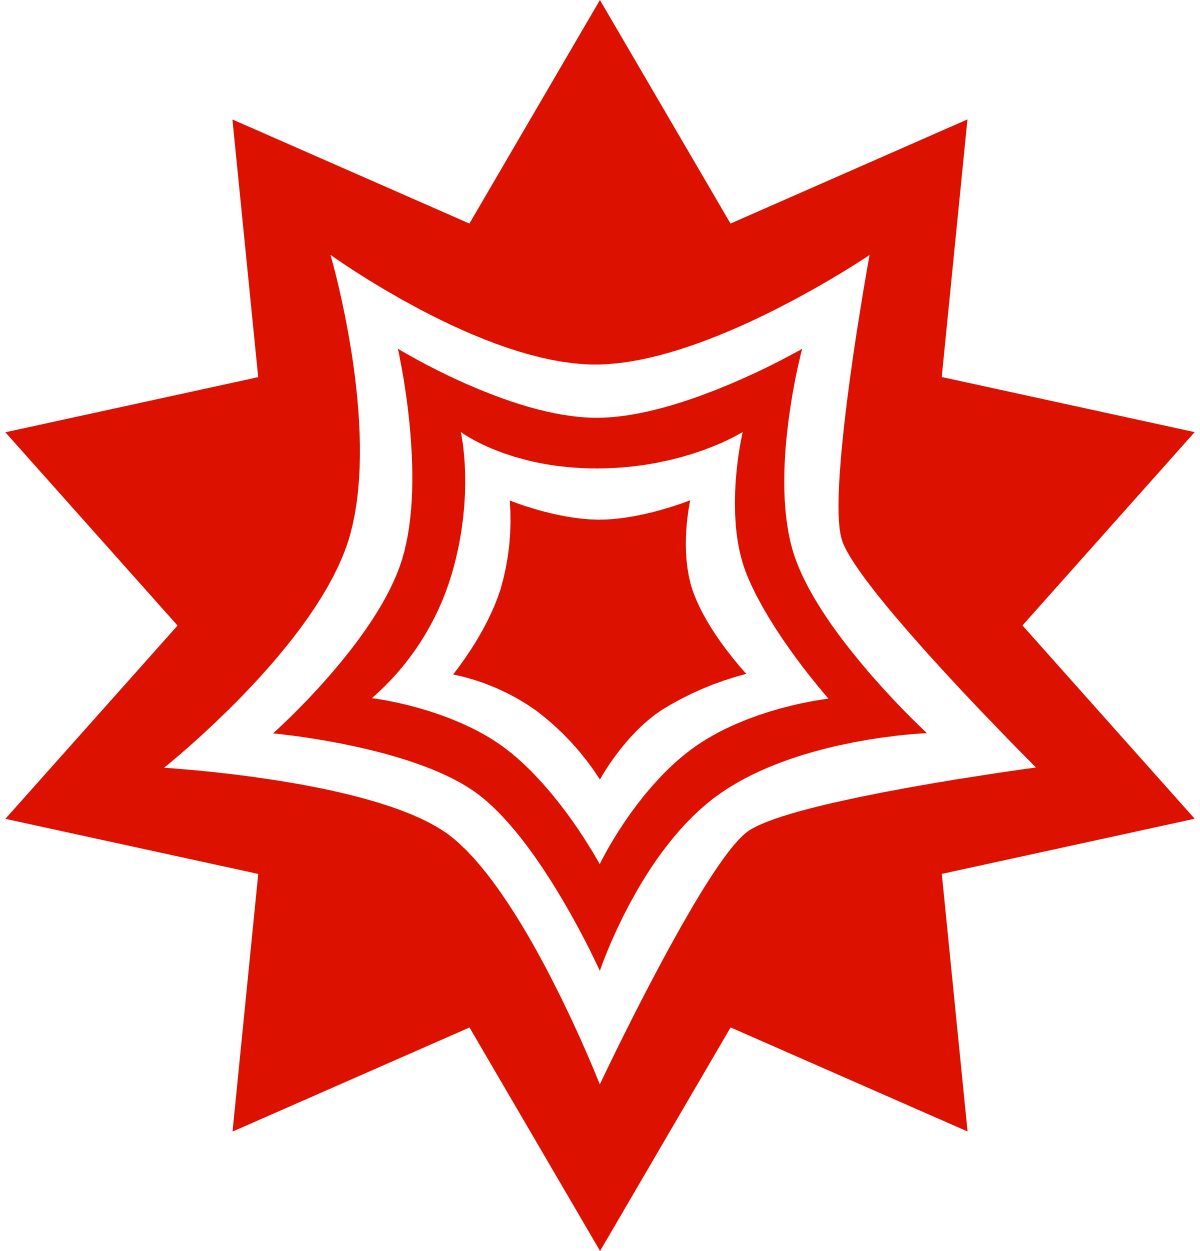 P I Red Flame Logo - Wolfram Mathematica